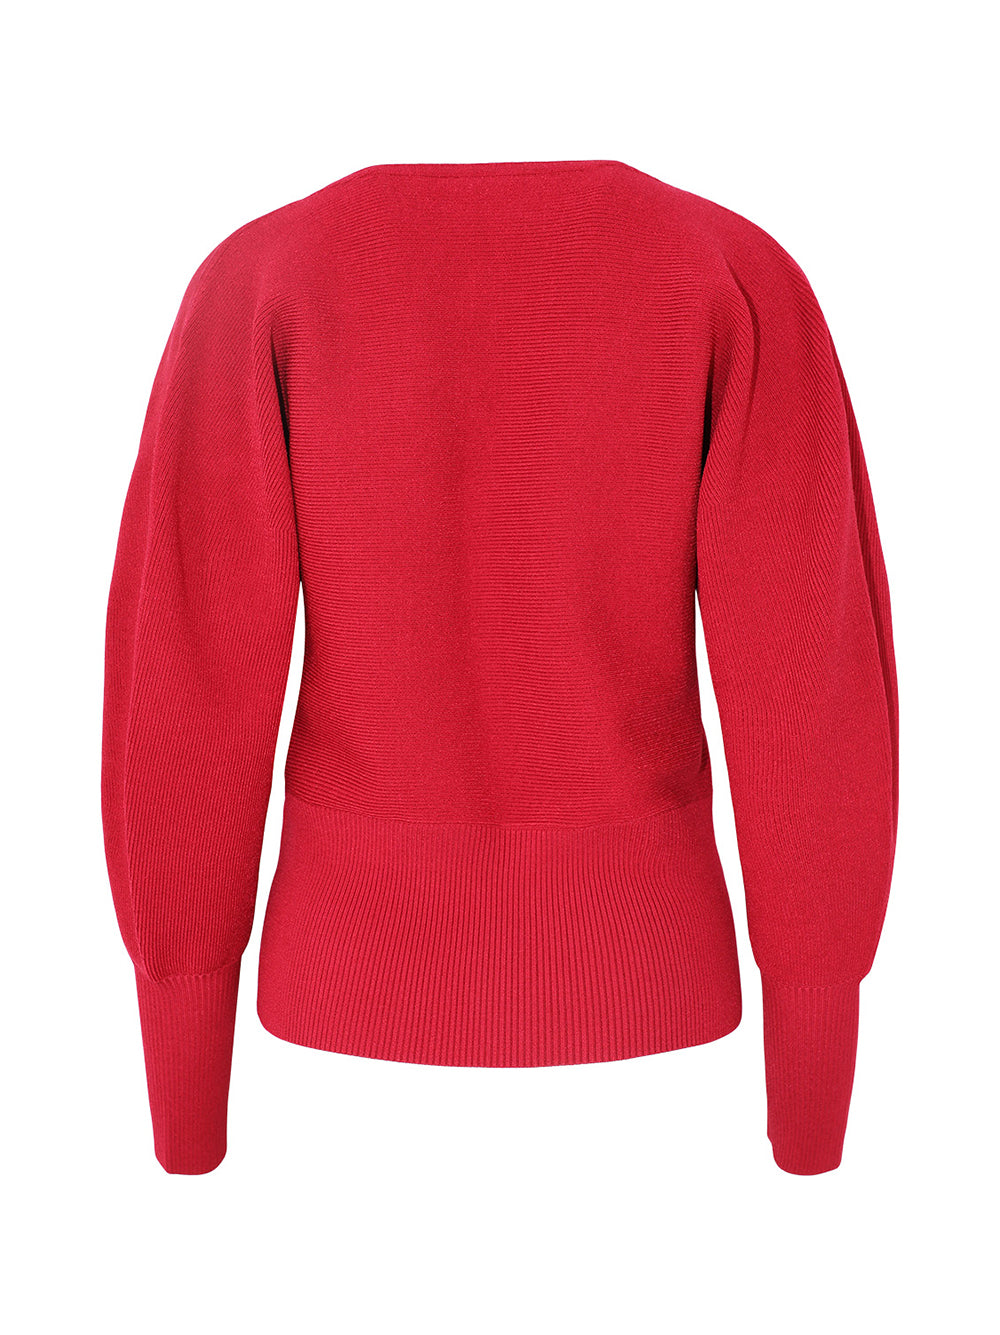 Simkhai Montana Pullover V-Neck Sweater in Cherry